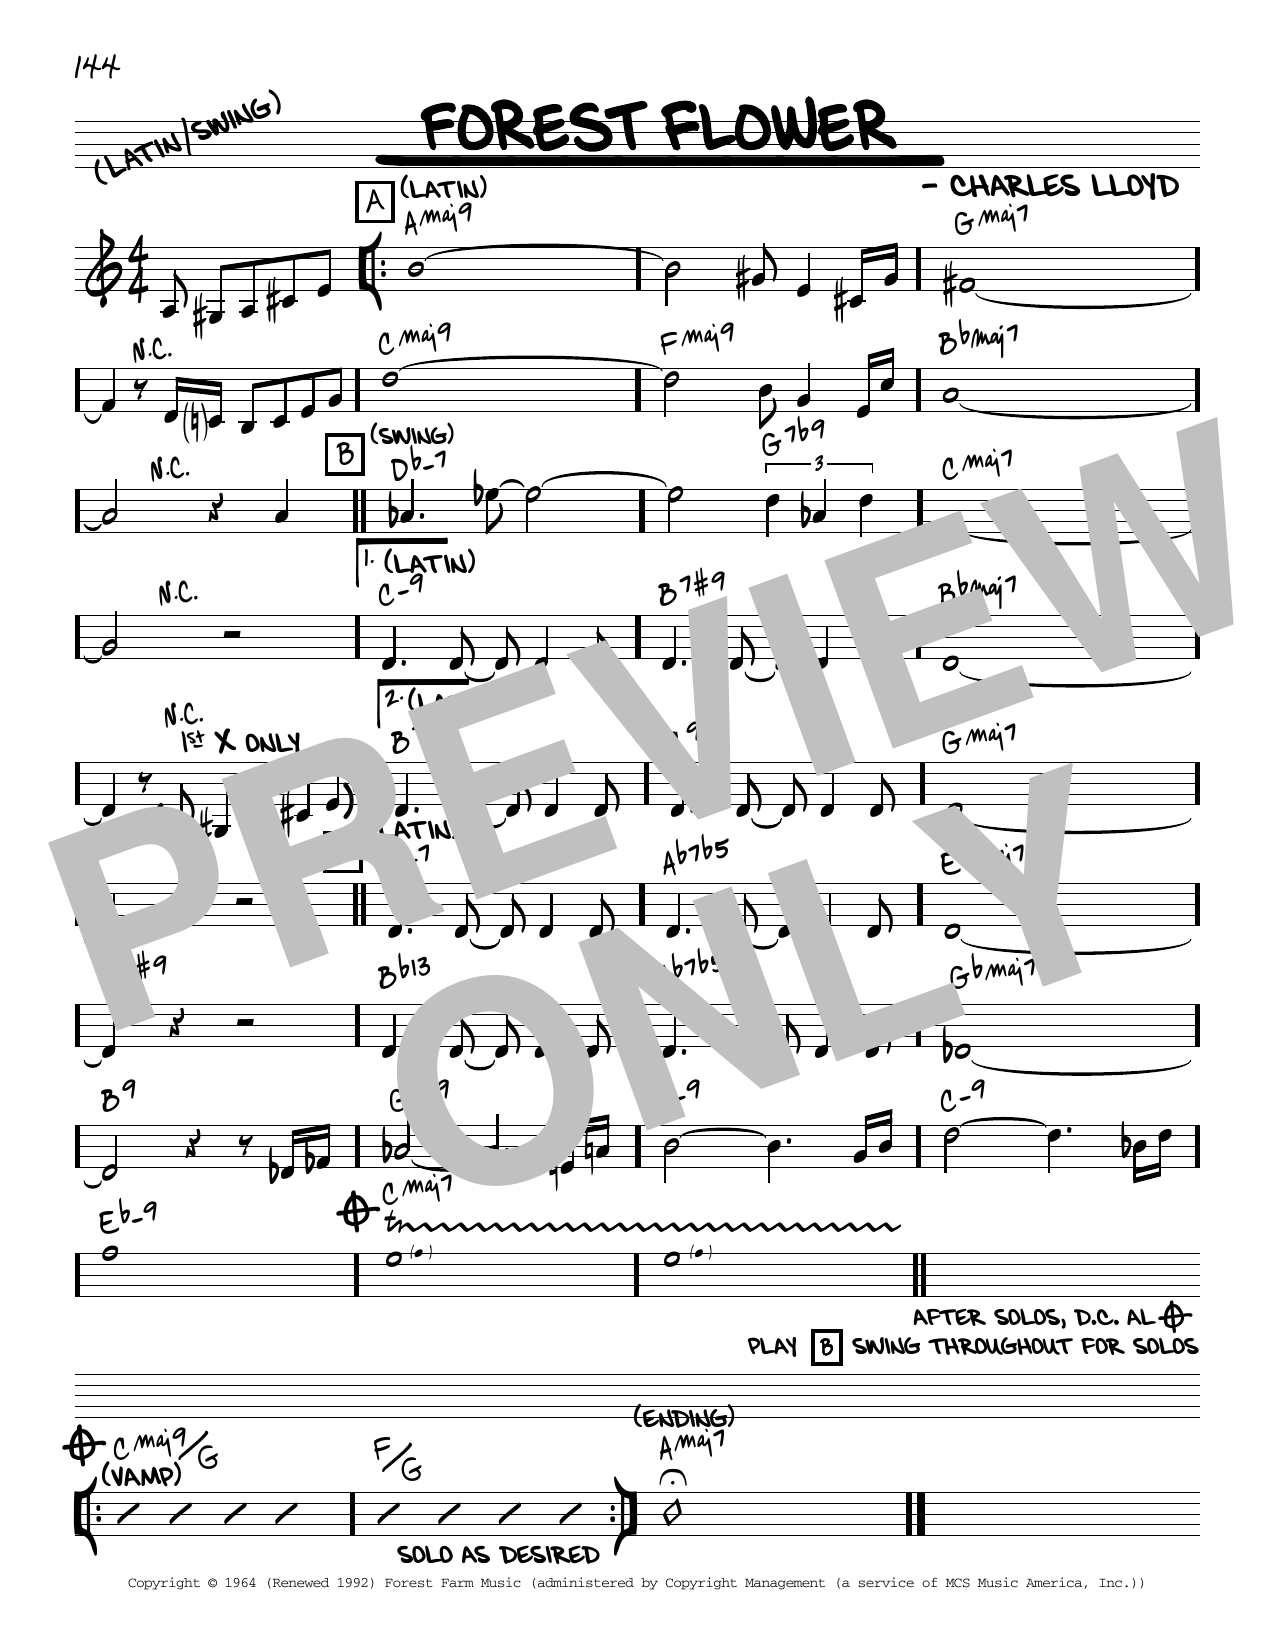 Download Charles Lloyd Forest Flower [Reharmonized version] (a Sheet Music